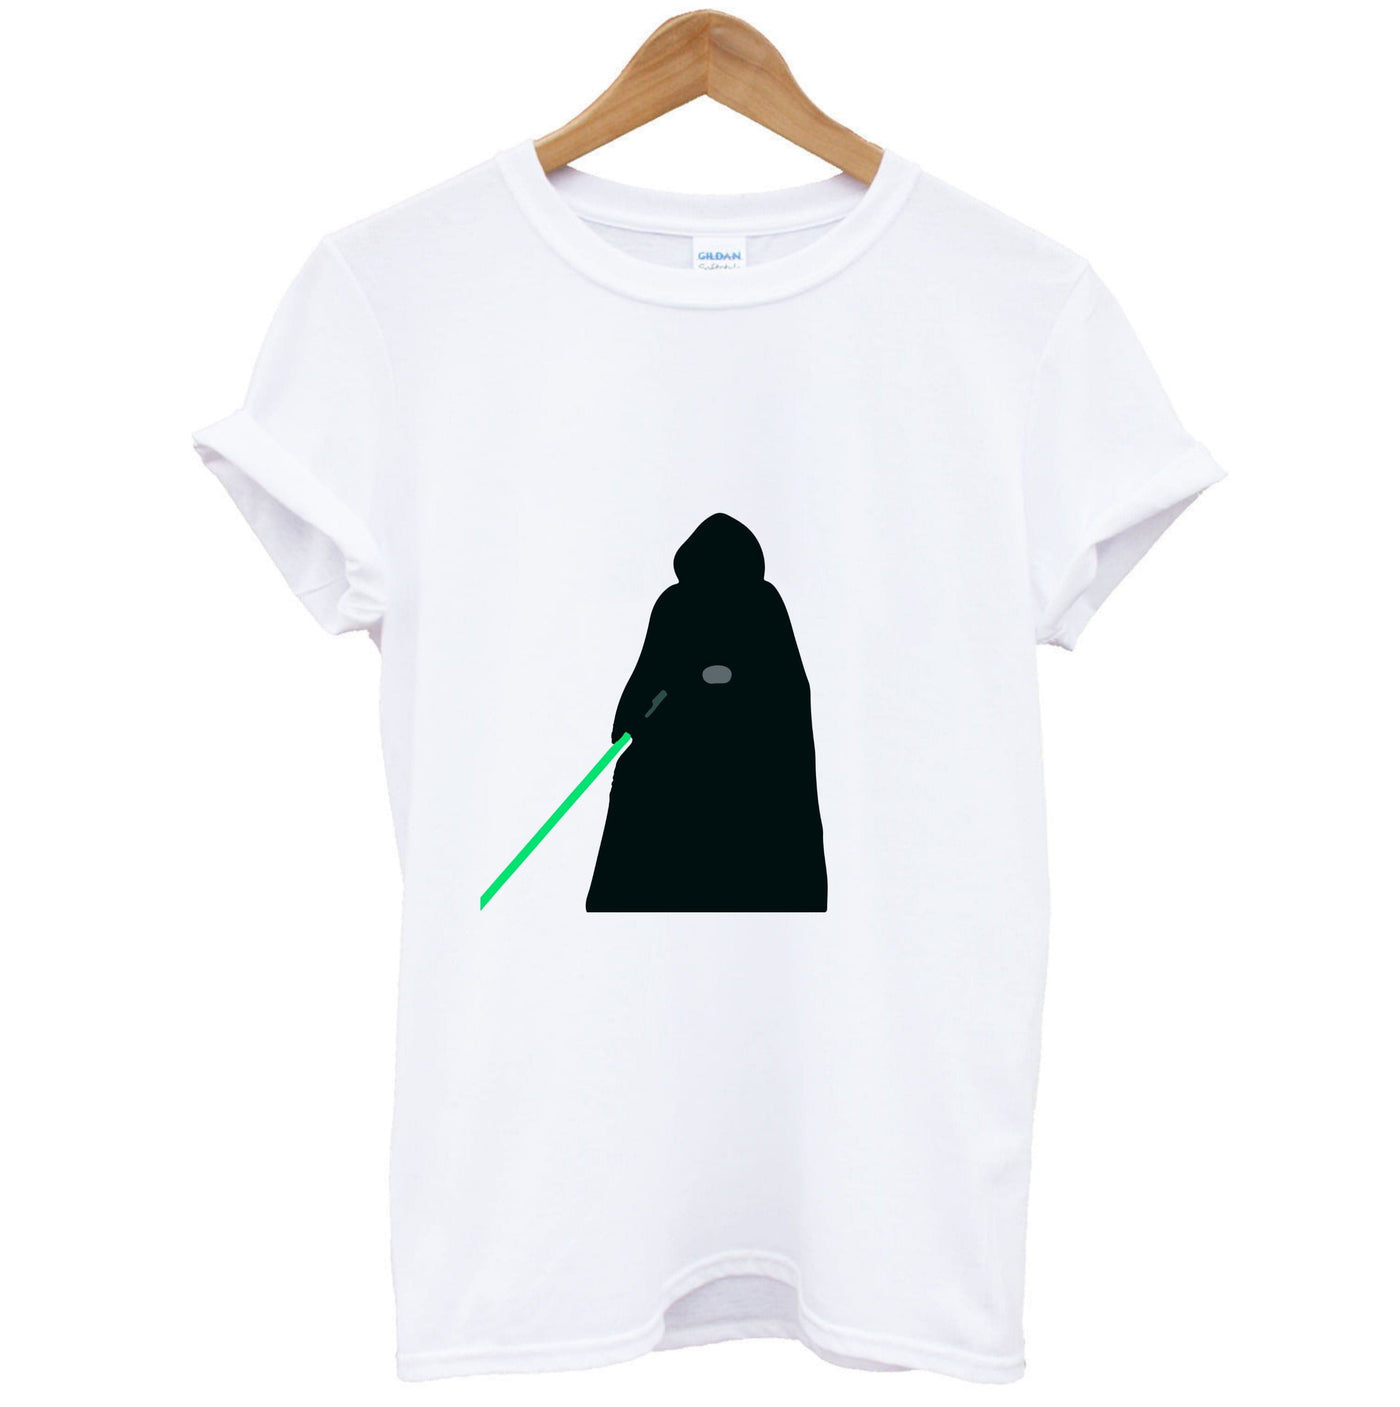 Darth Vader - Star Wars T-Shirt